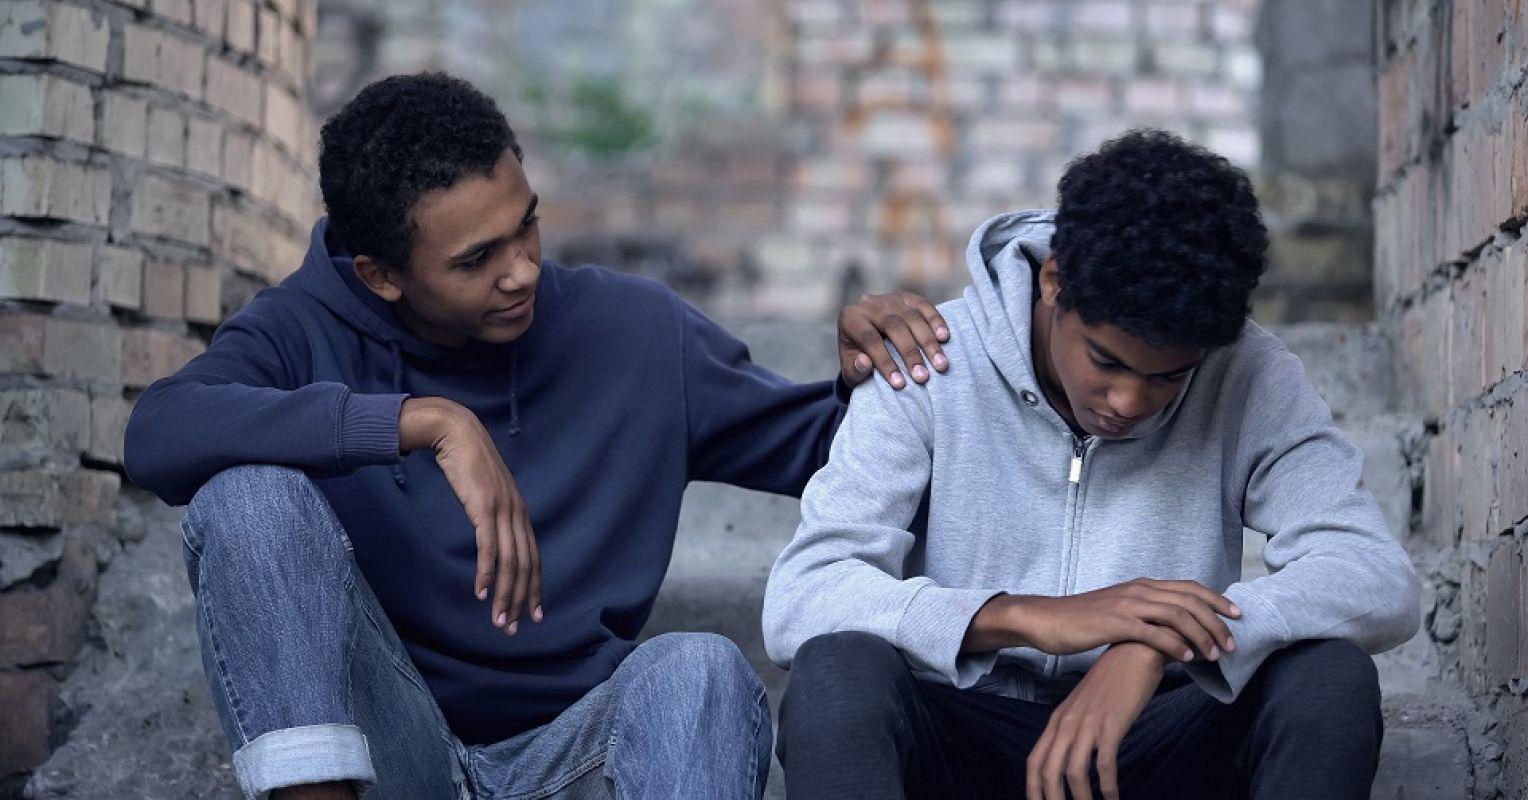 Teen Suicide Awareness: Understanding Warning Signs Can Be Lifesaving